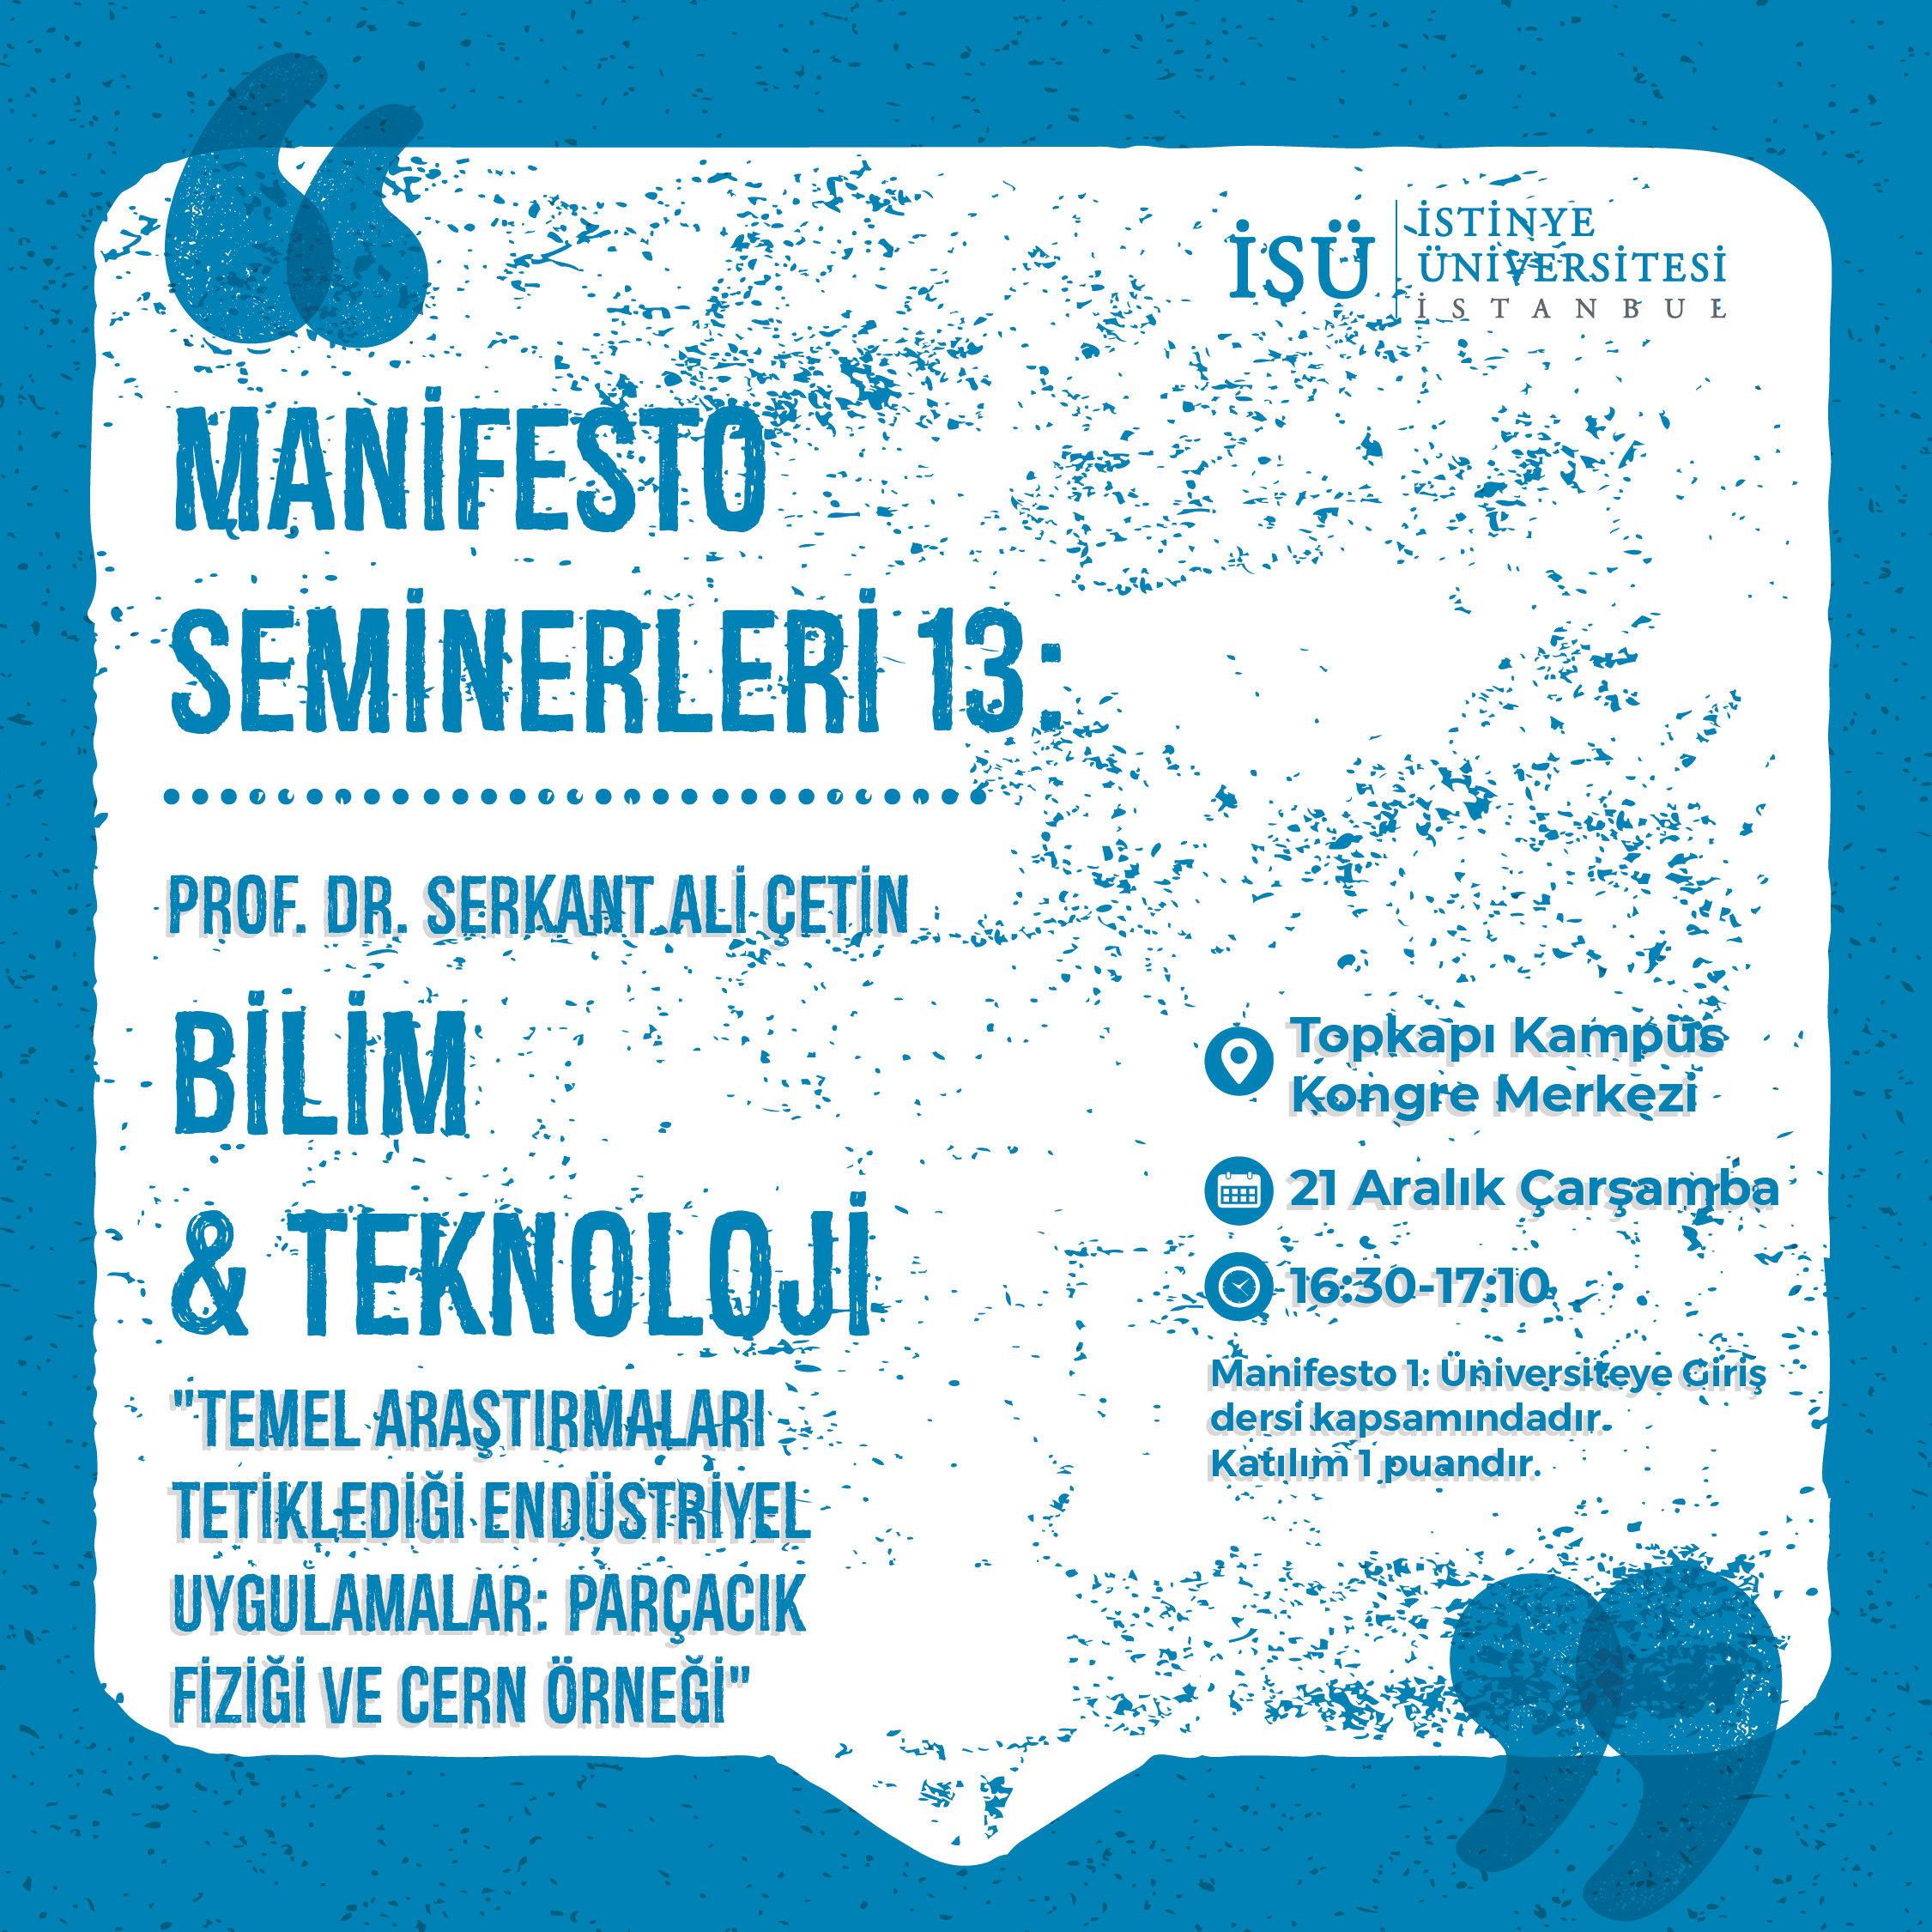 Manifesto Seminerleri 13: Bilim & Teknoloji